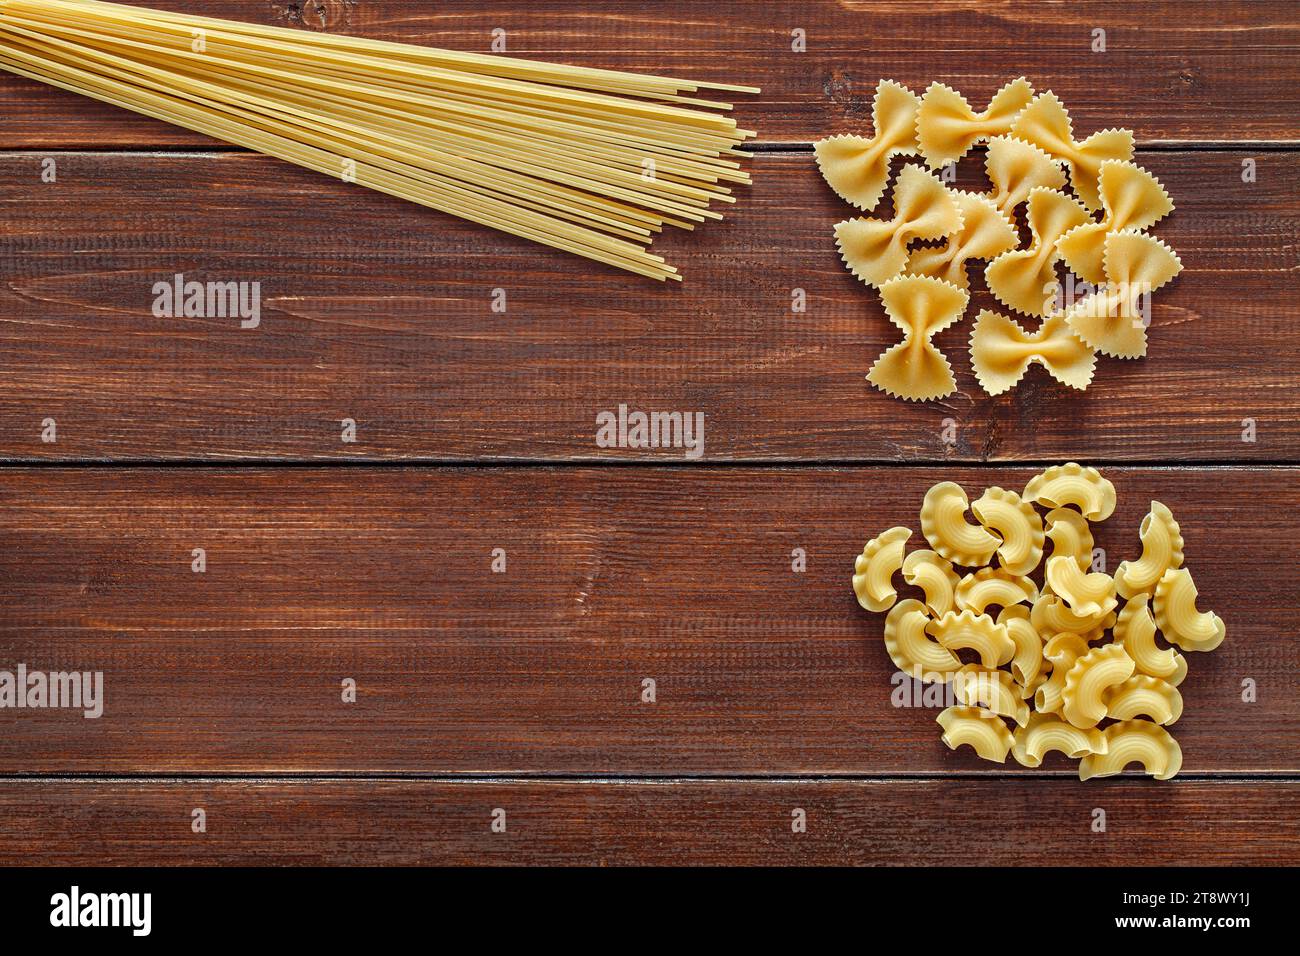 Spaghetti, maccheroni raw, farfalle, cresta di gallo, on wooden brown planks dark background, top view, space to copy text. Stock Photo